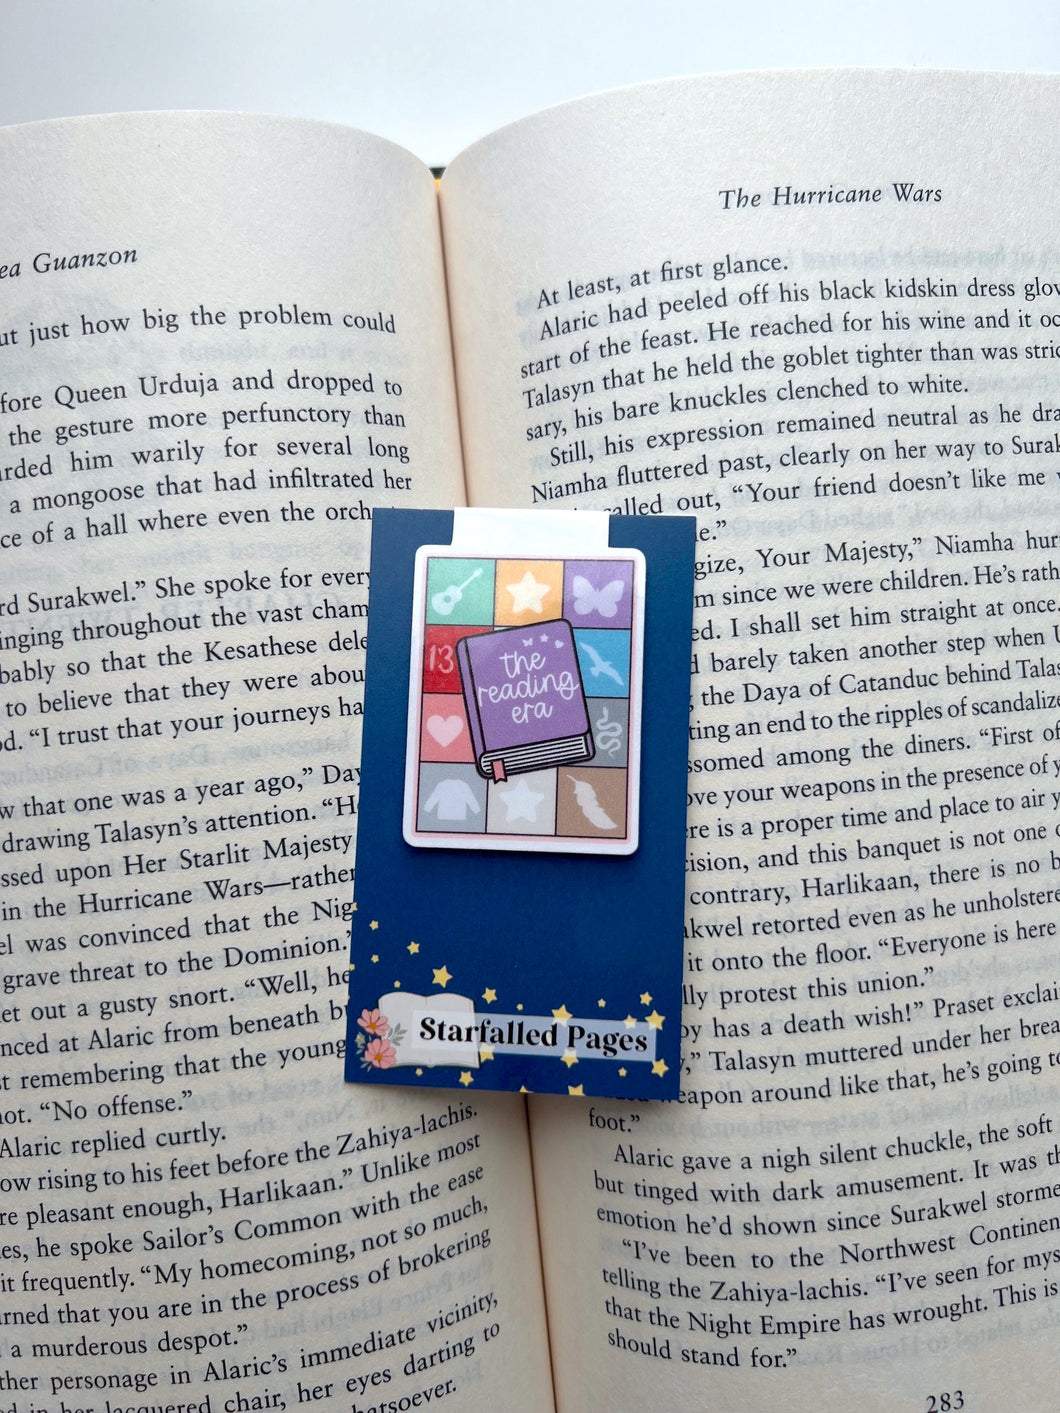 The Reading Era / Magnetic Bookmark